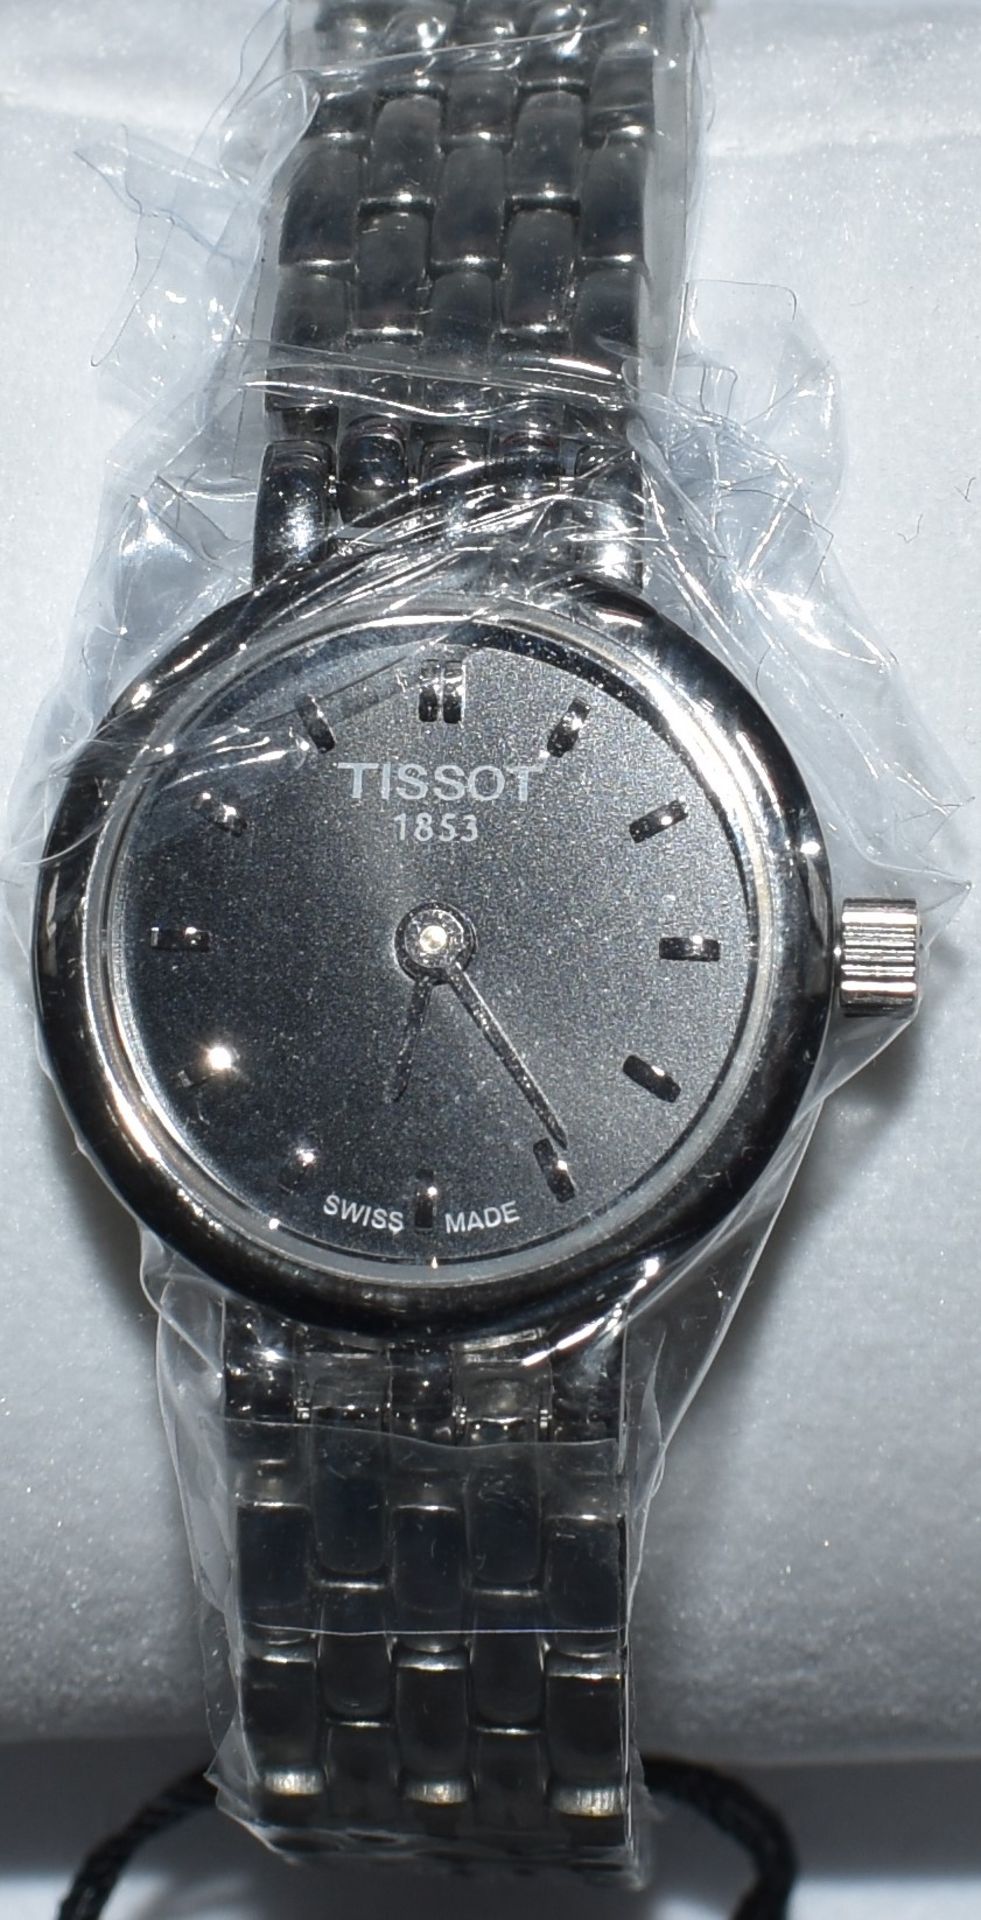 Tissot Ladies Watch TO58.009.11.051.00 - Image 2 of 3